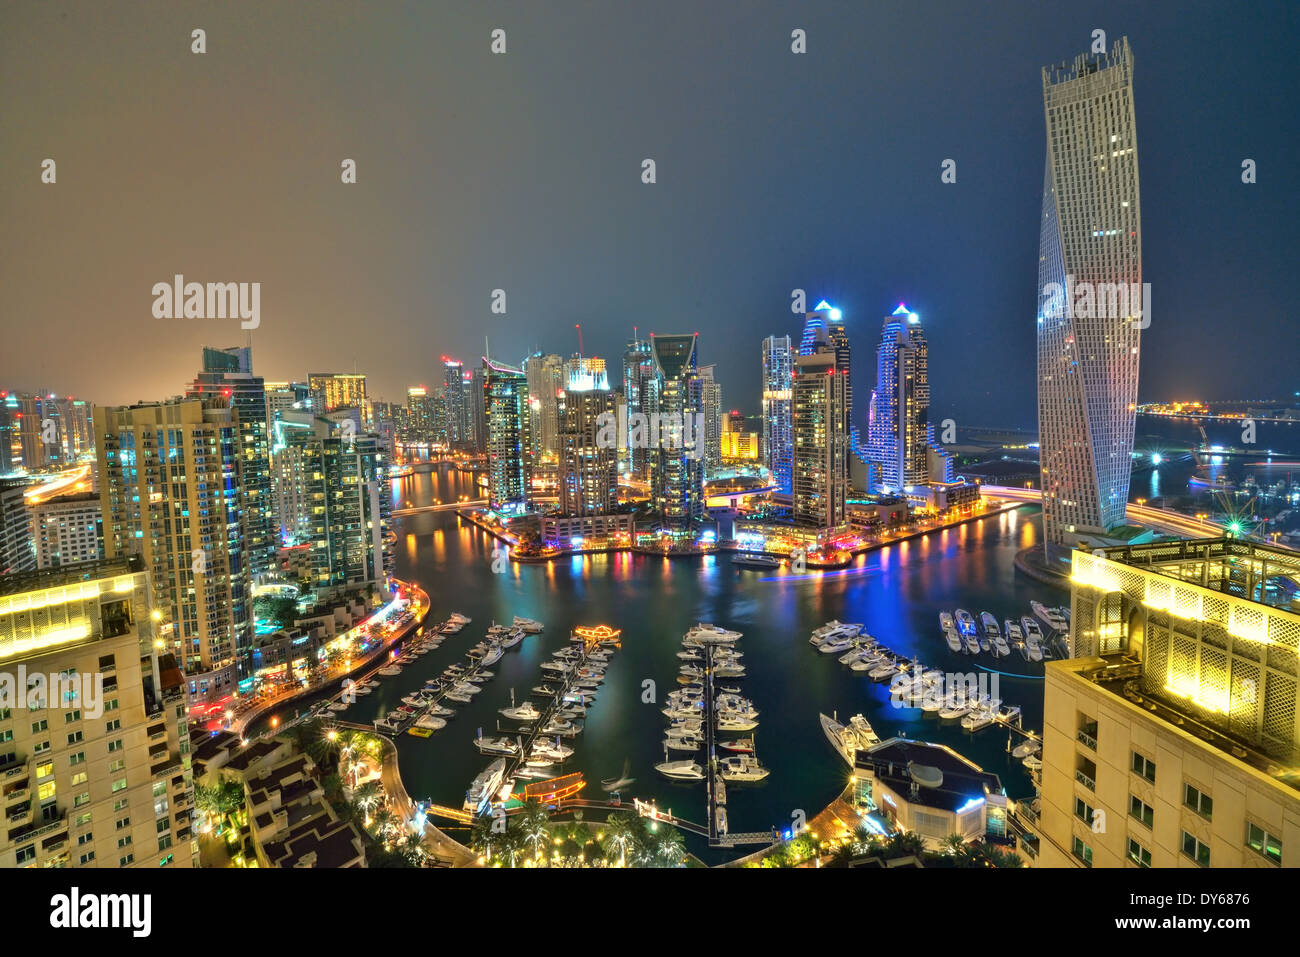 new Dubai or Dubai Marina in the evening Stock Photo